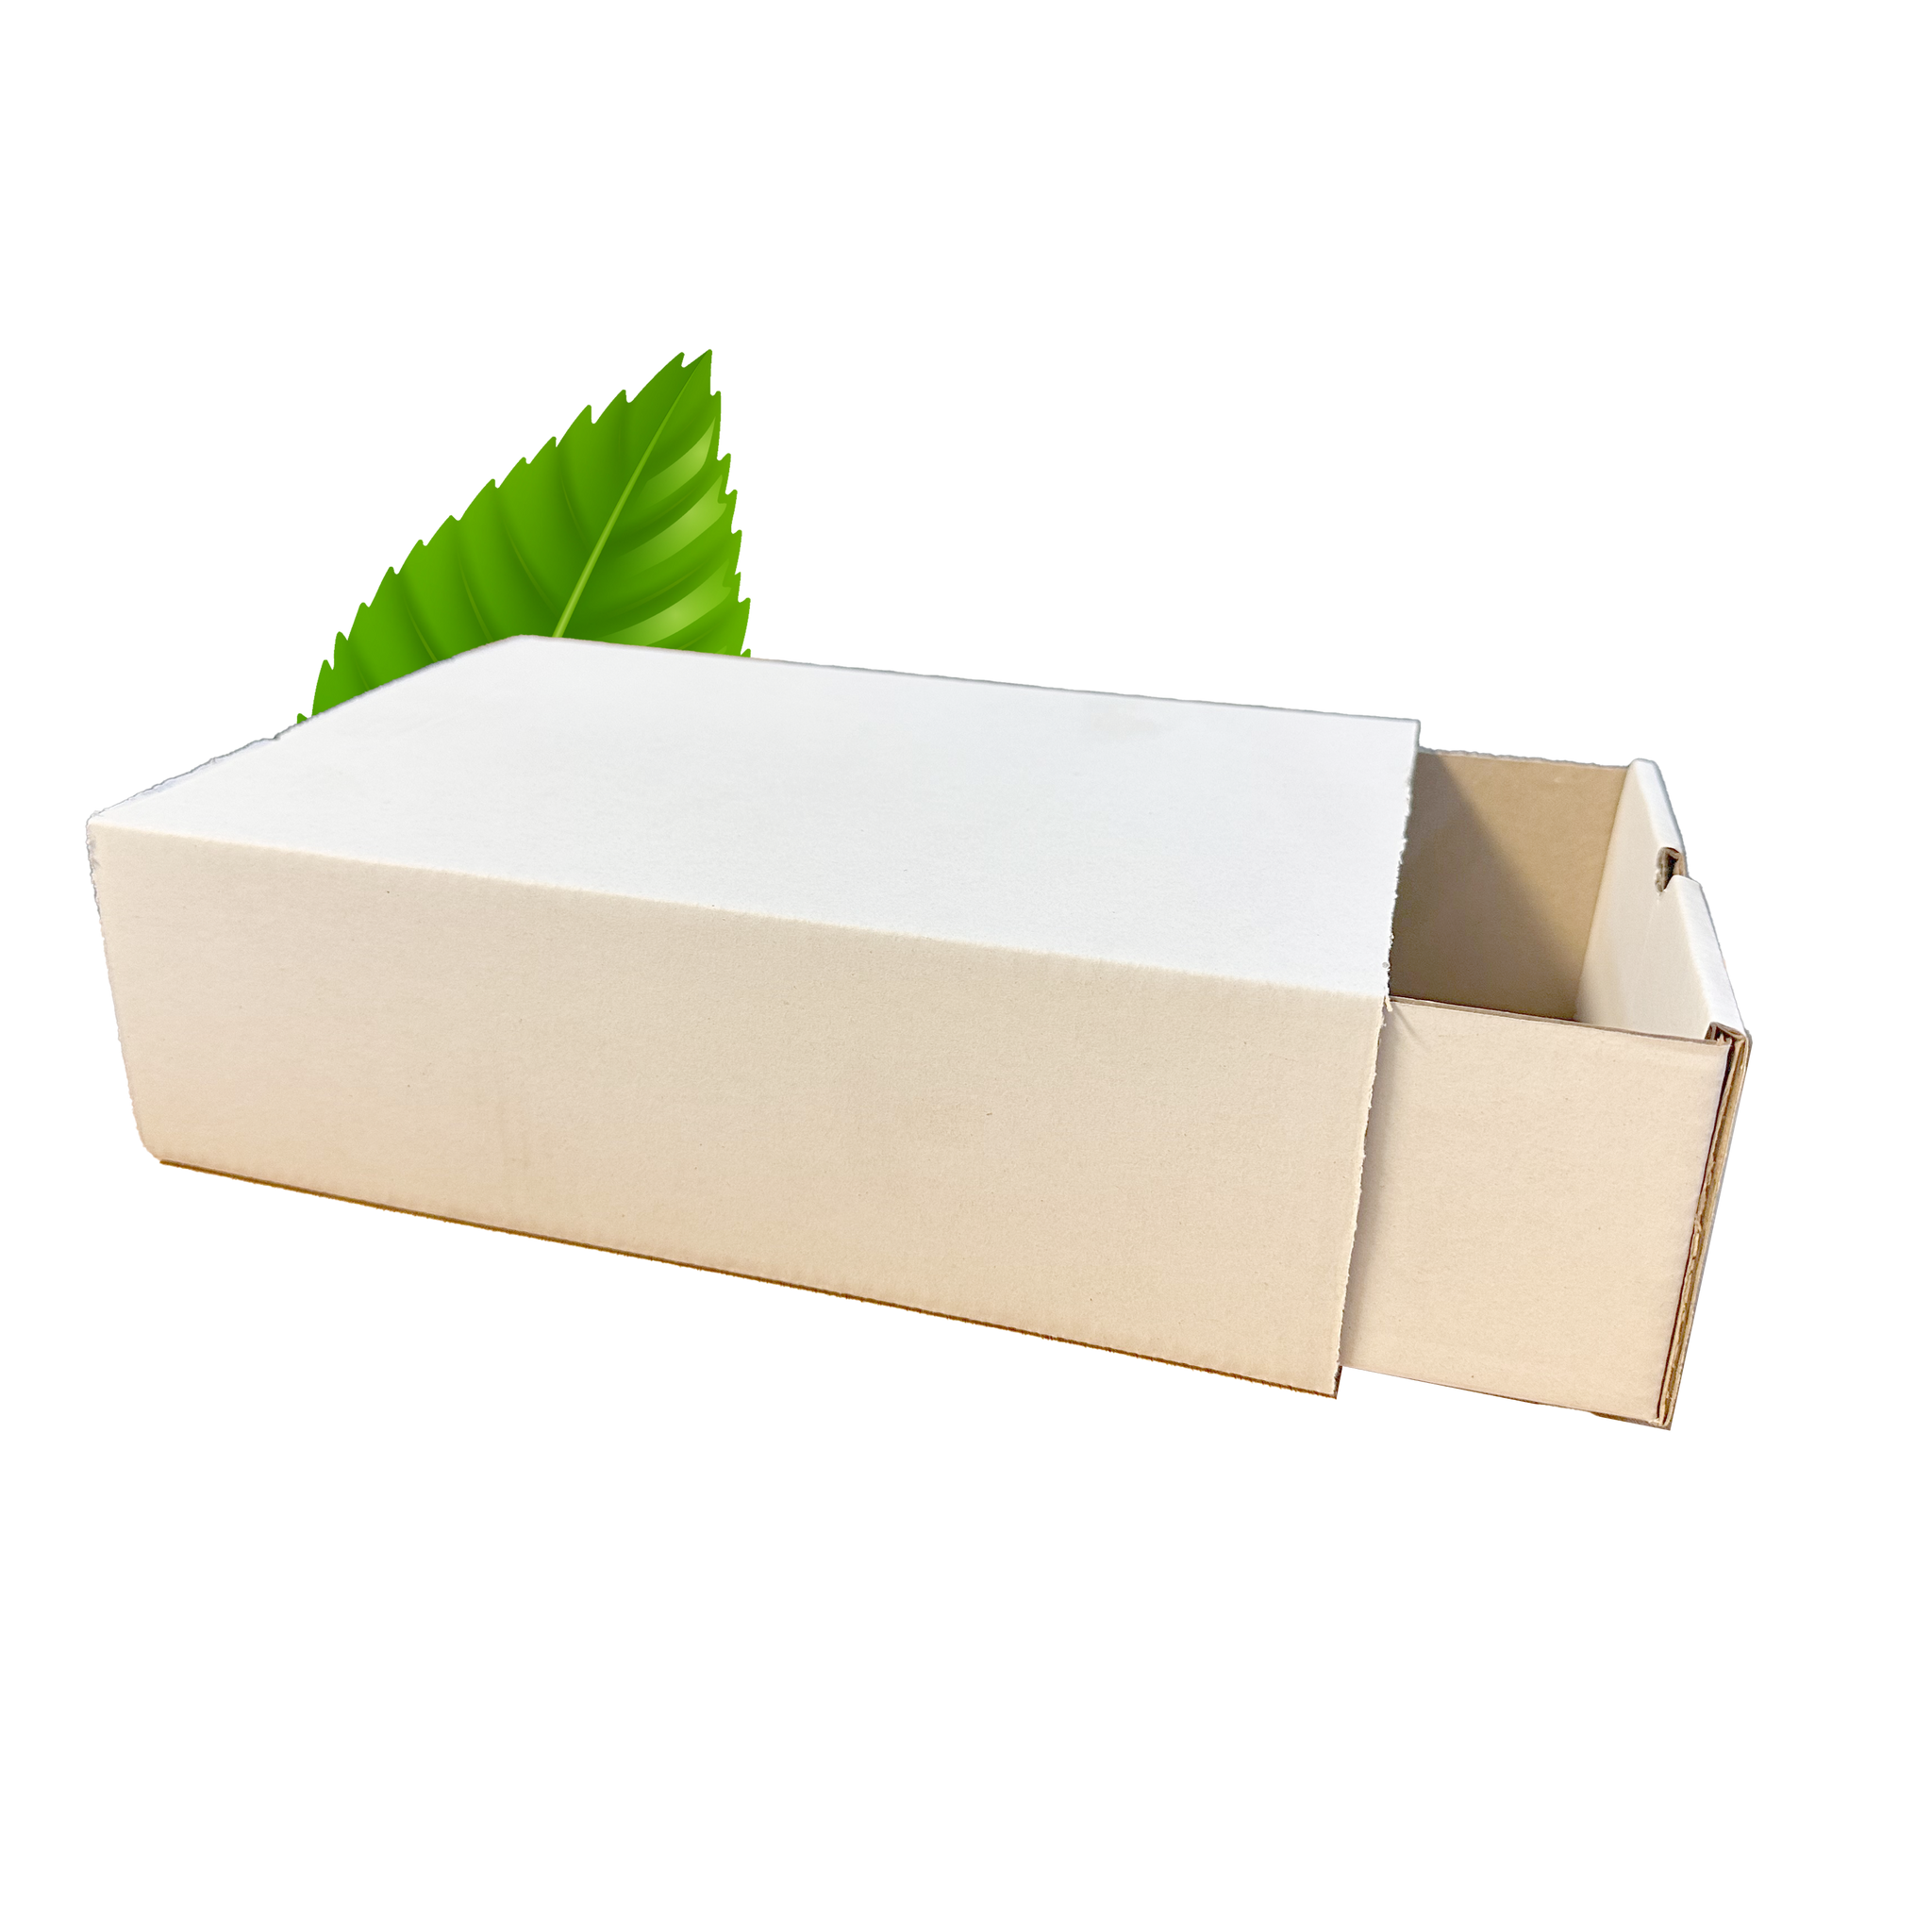 White Sleeve & Base Box - Large - 350x240x90mm (pack of 10)